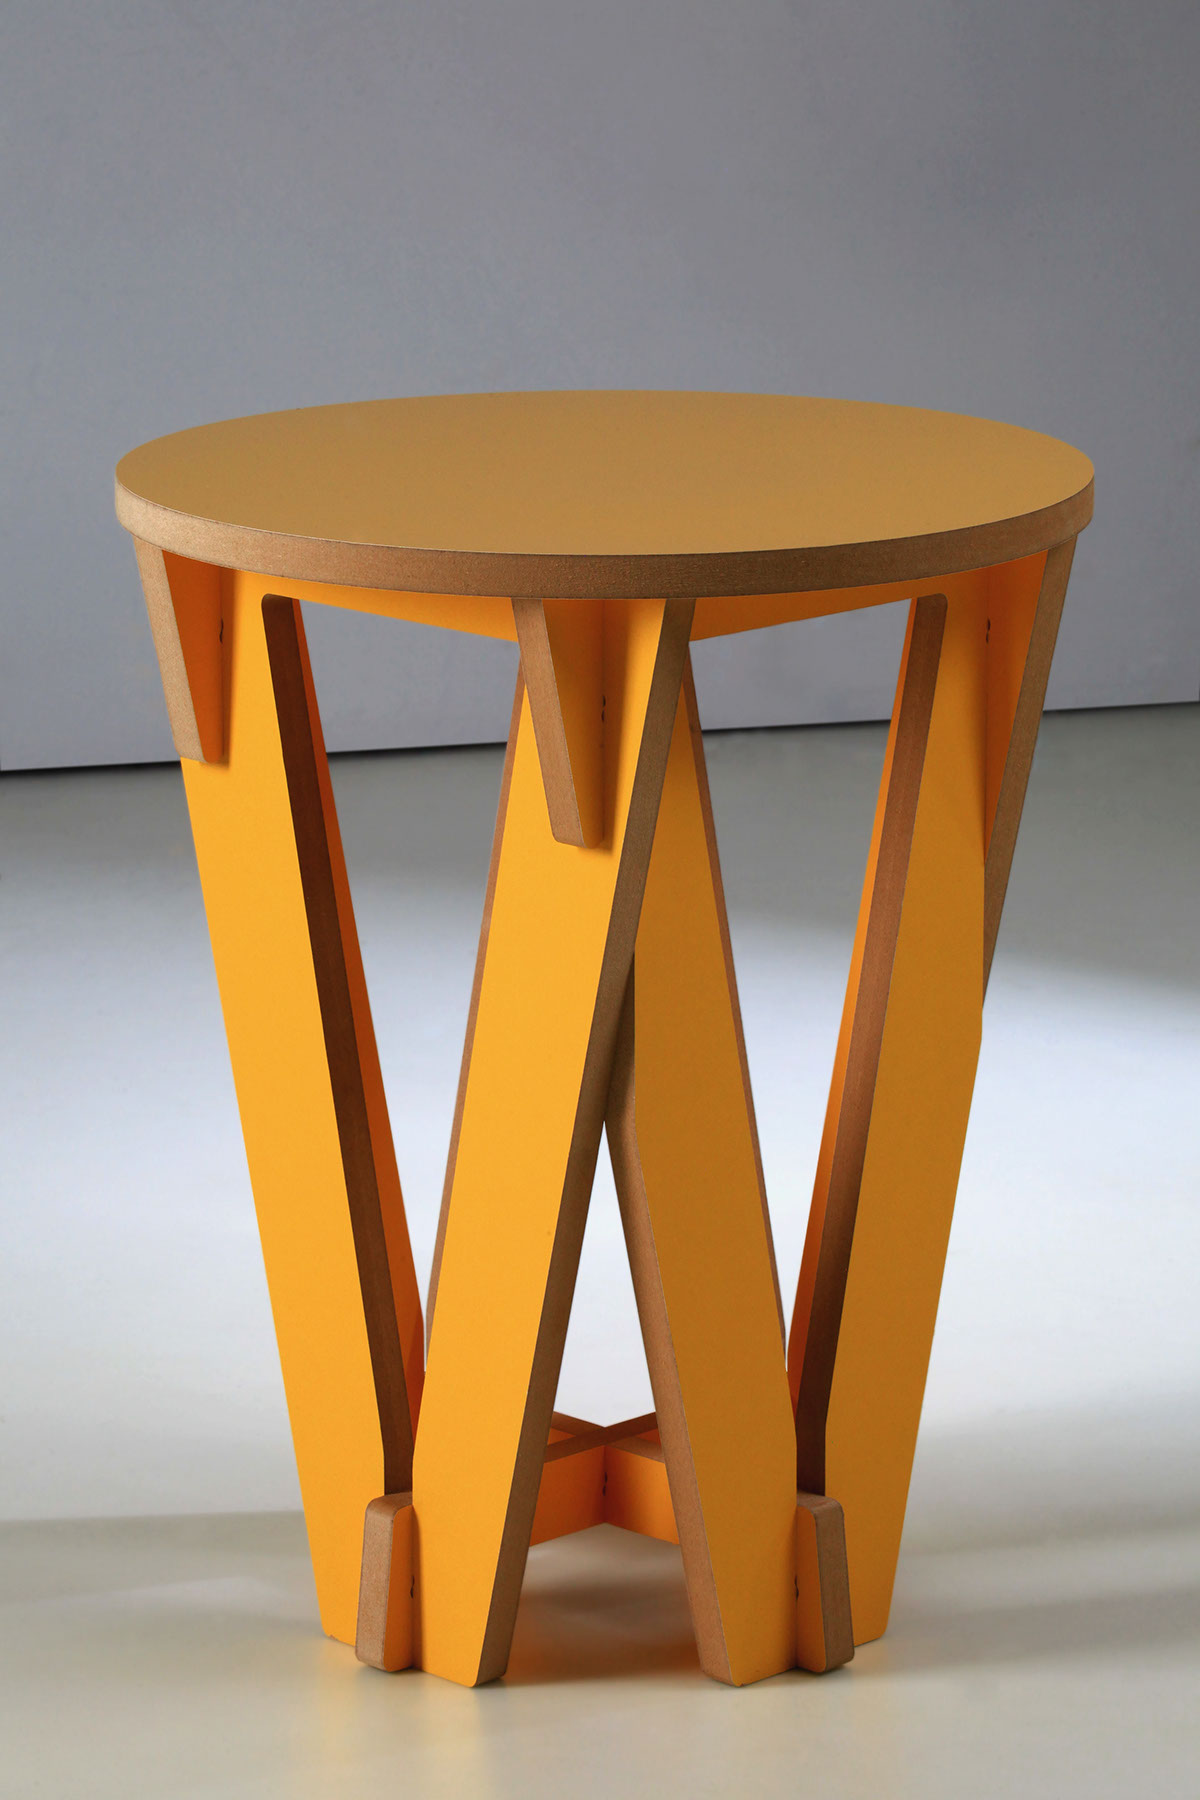 cnc diseño diseño mexicano mexico Mexican Design design Router mdf furniture stool side table banco mesa auxiliar mobiliario